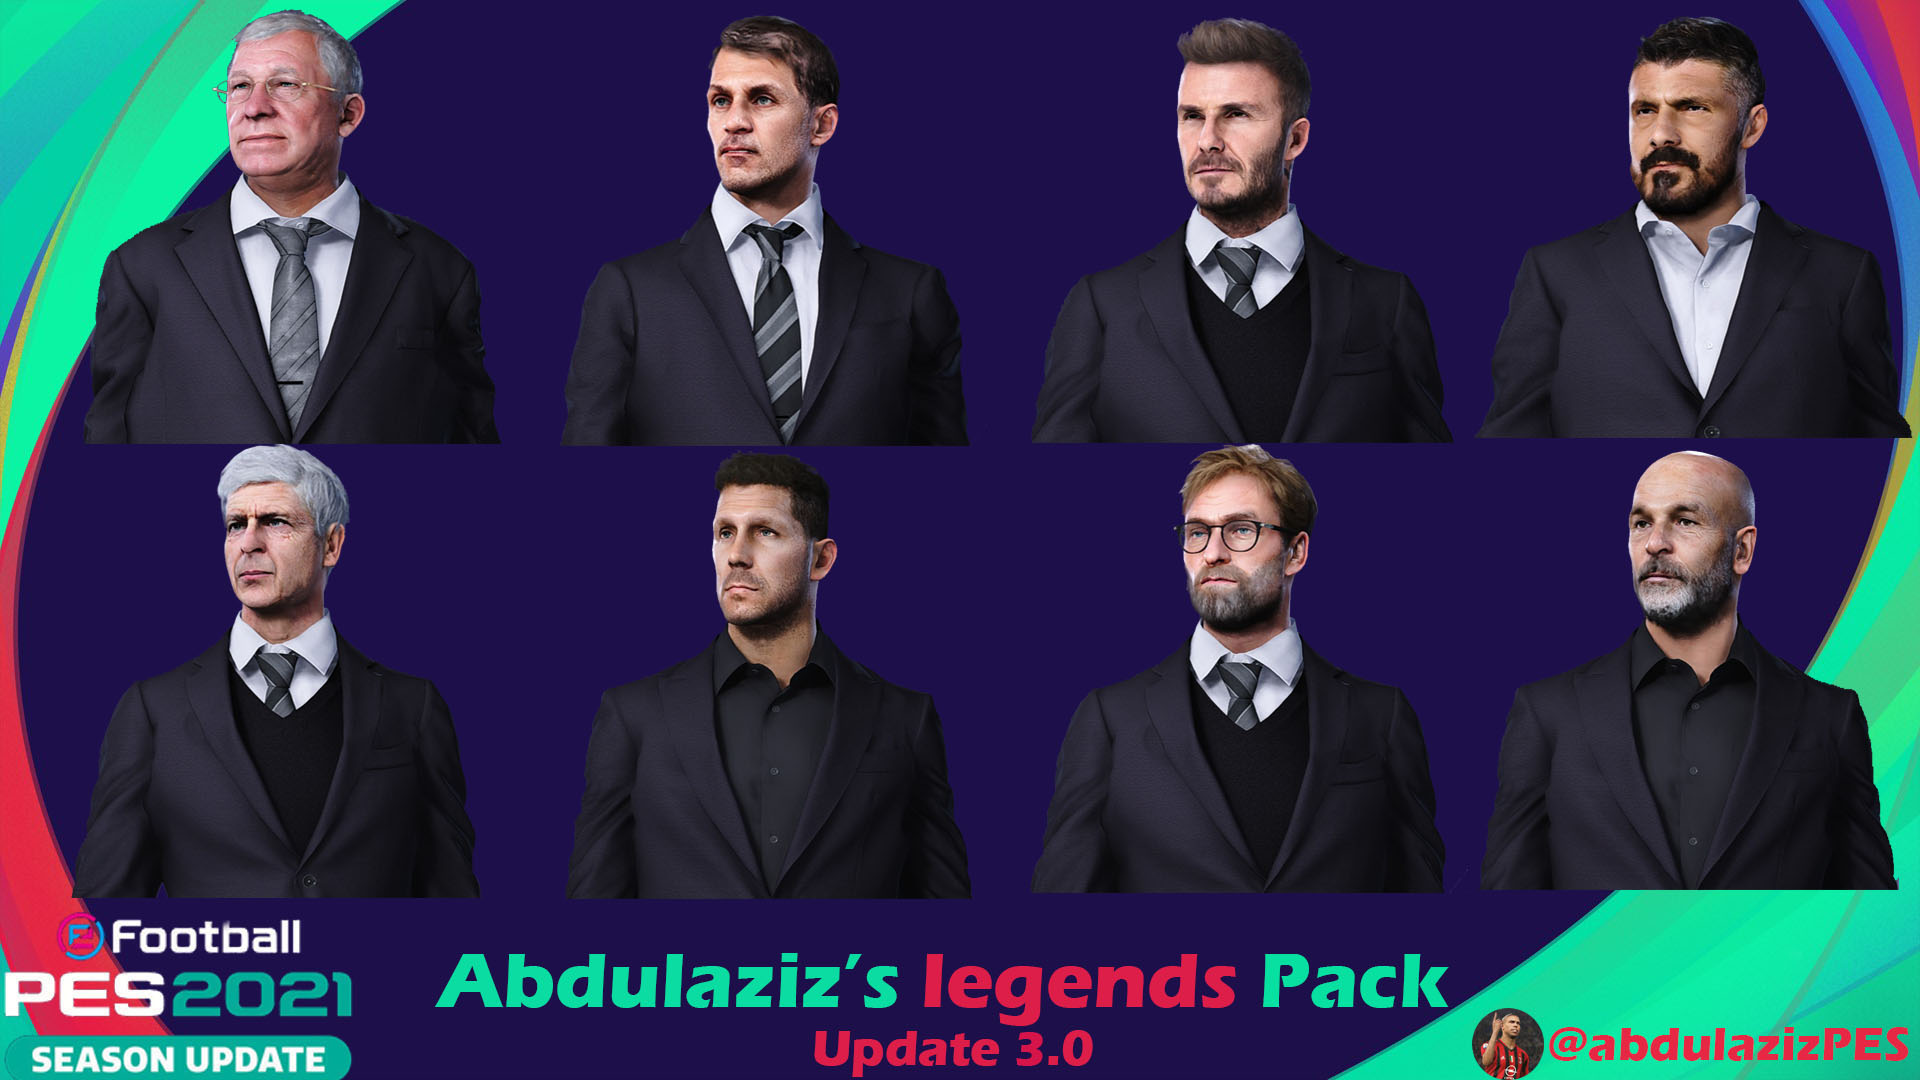 PES 2021 Abdulaziz's legends Pack Update 3.0